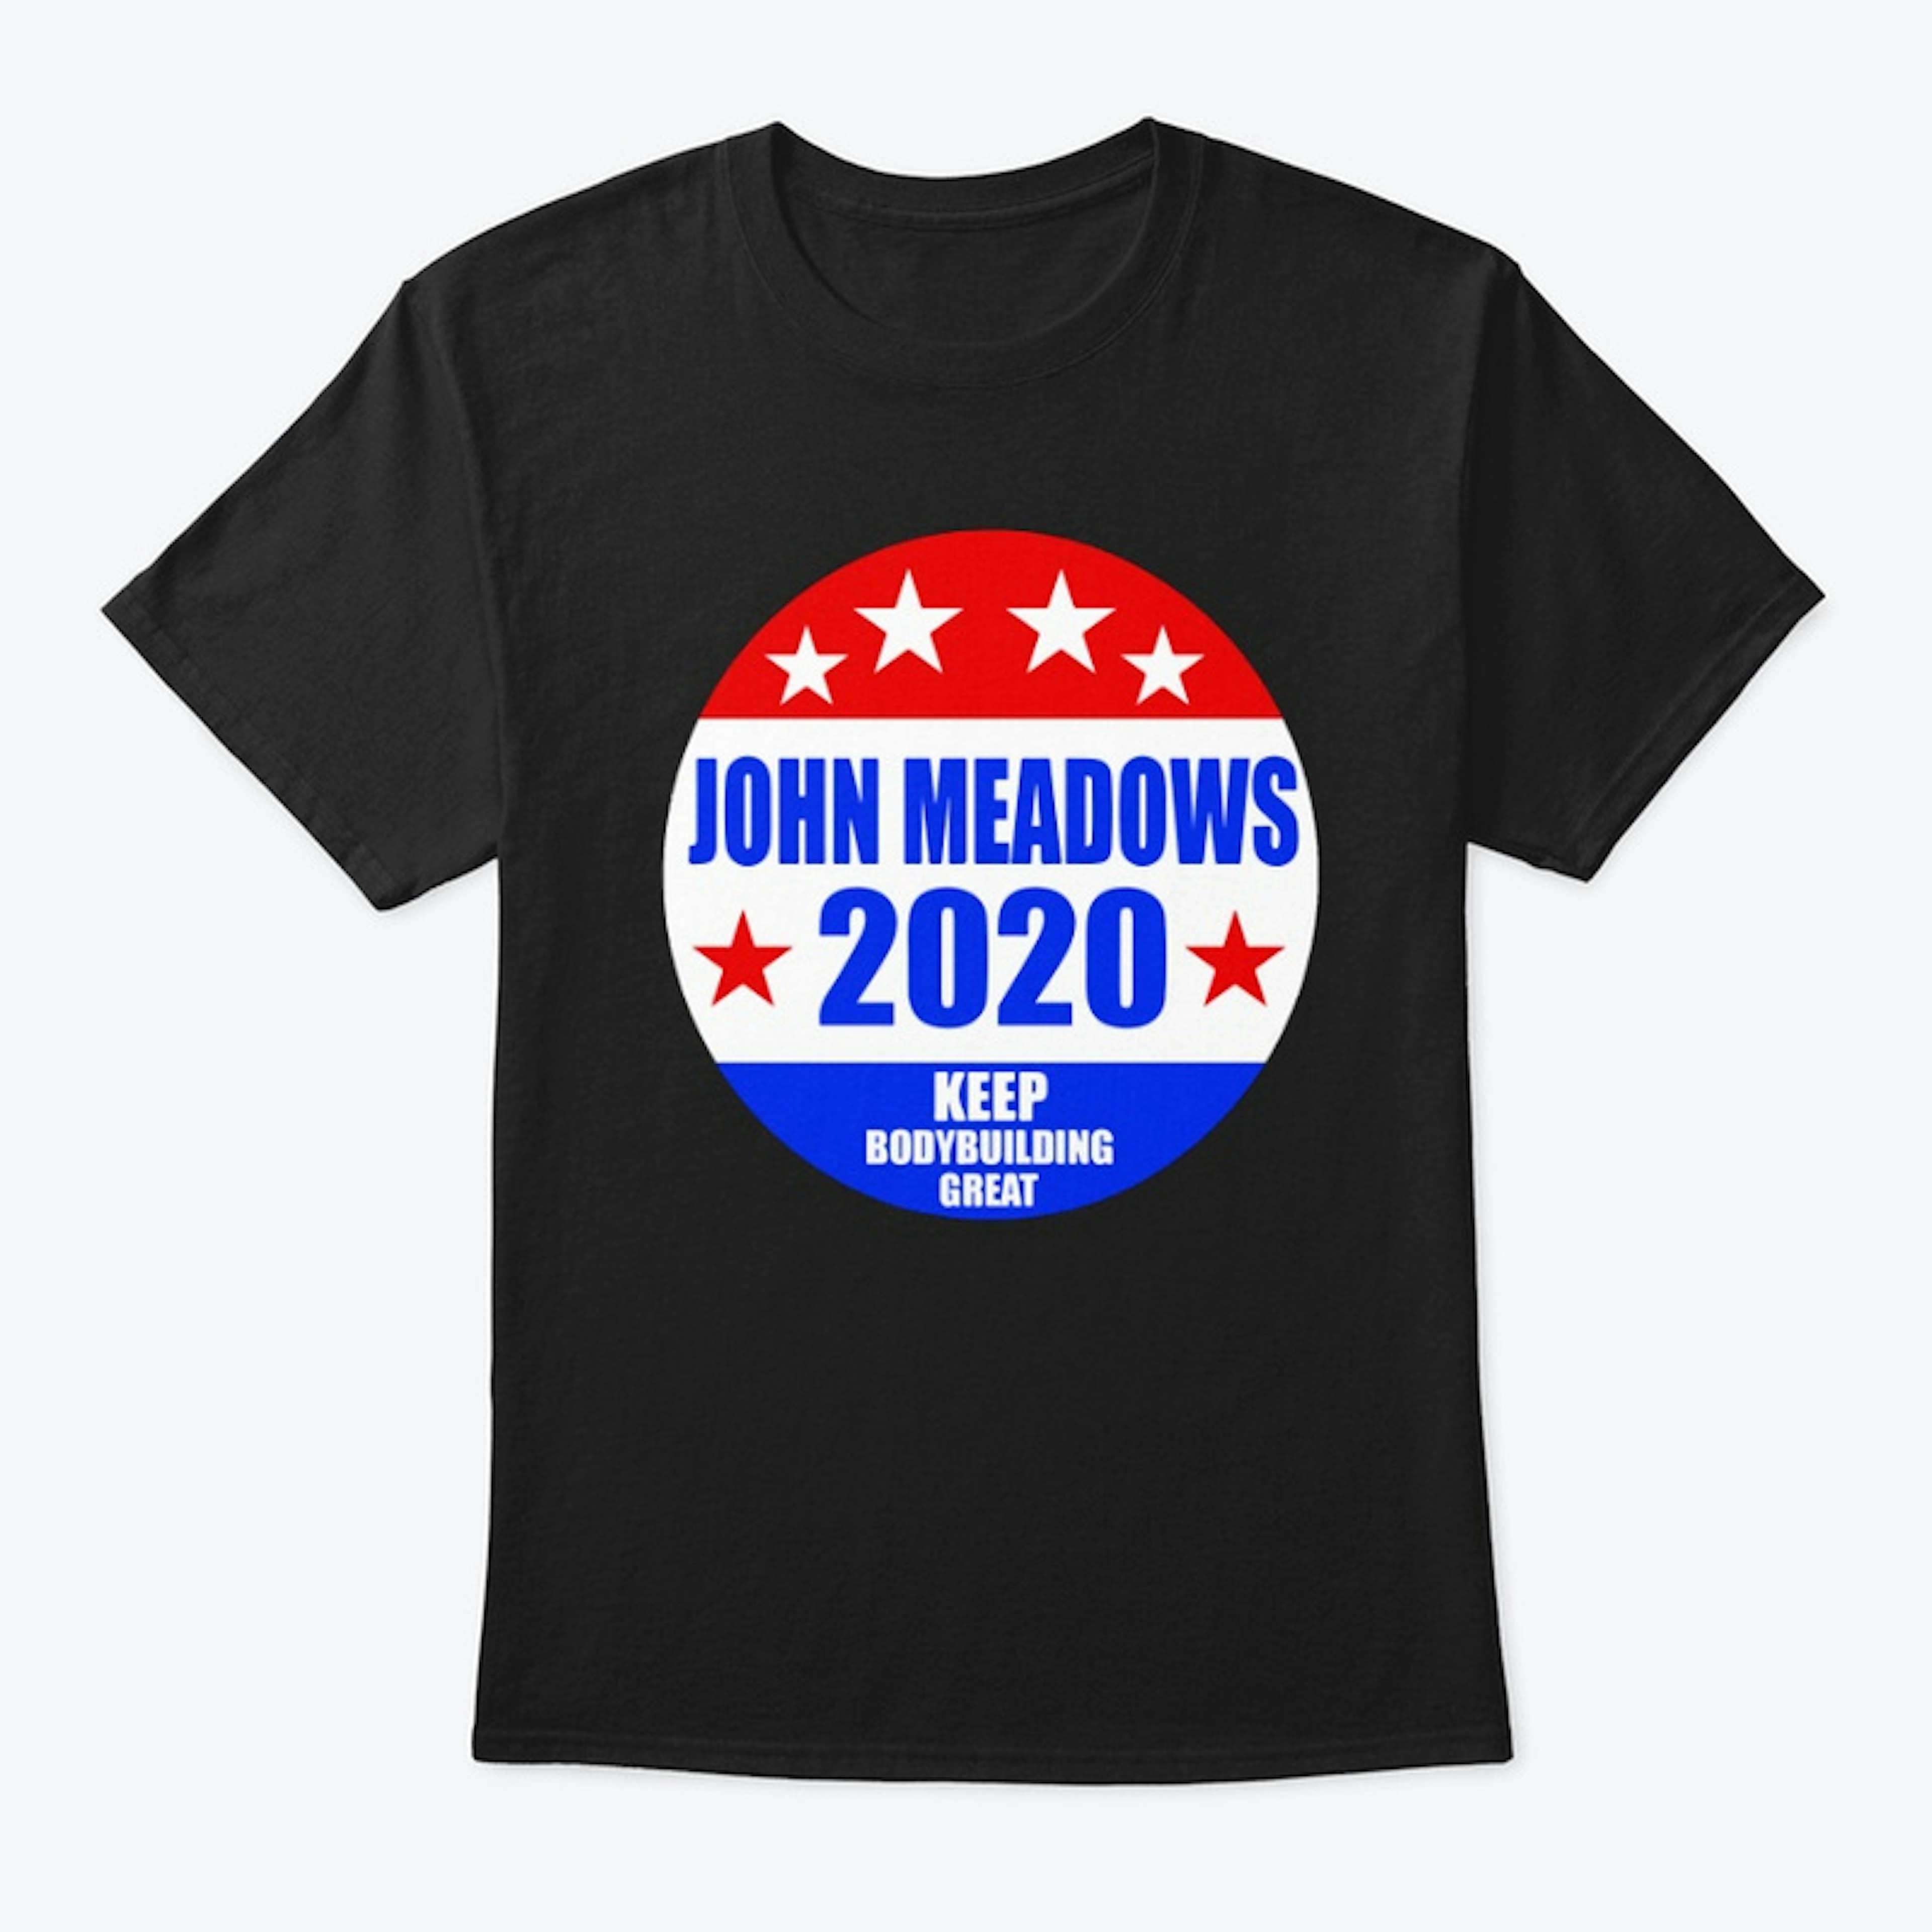 Meadows 2020 shirt